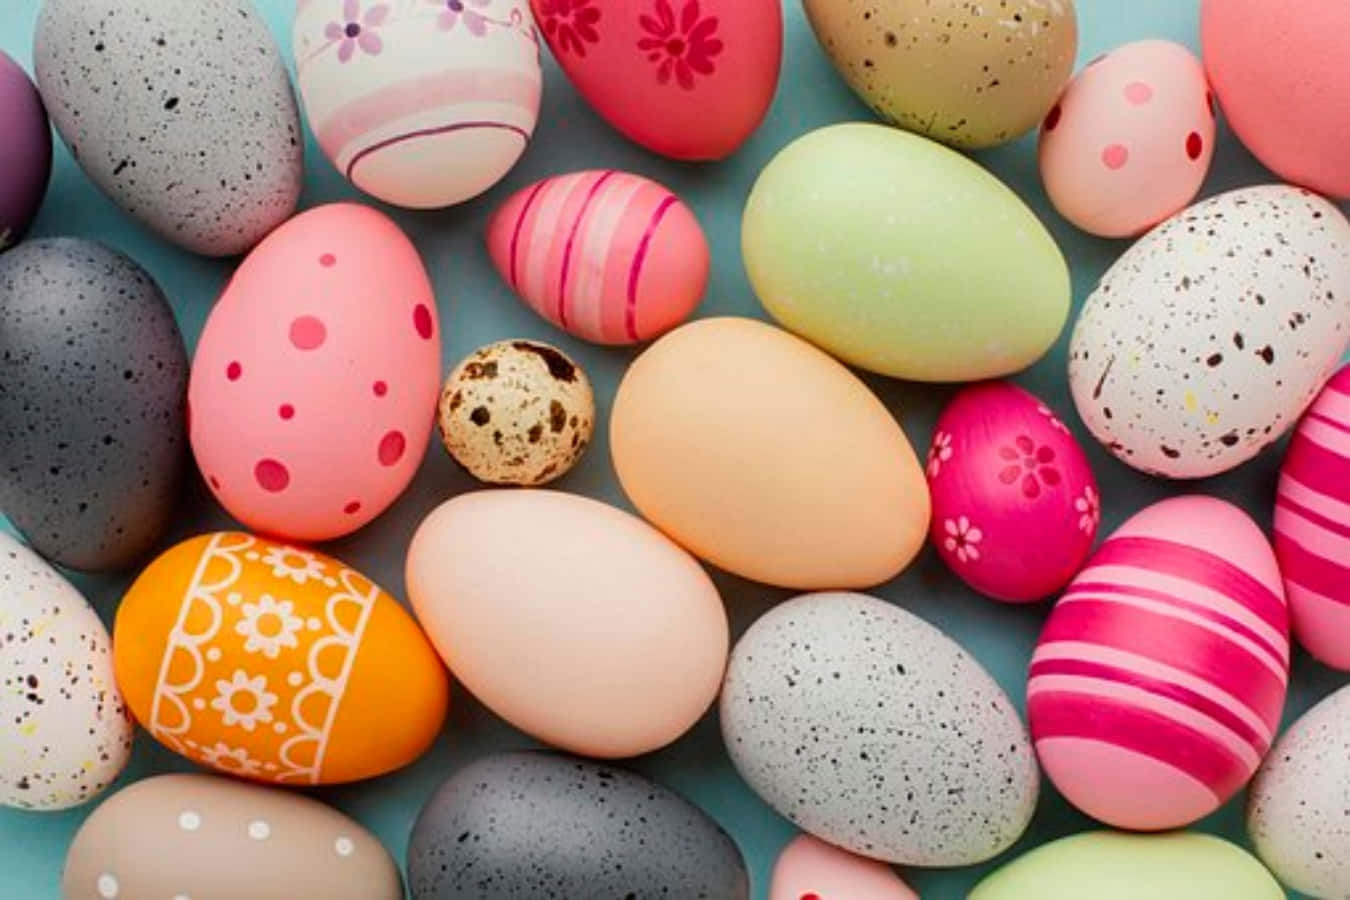 Diferentestamaños De Imagen De Huevos De Pascua